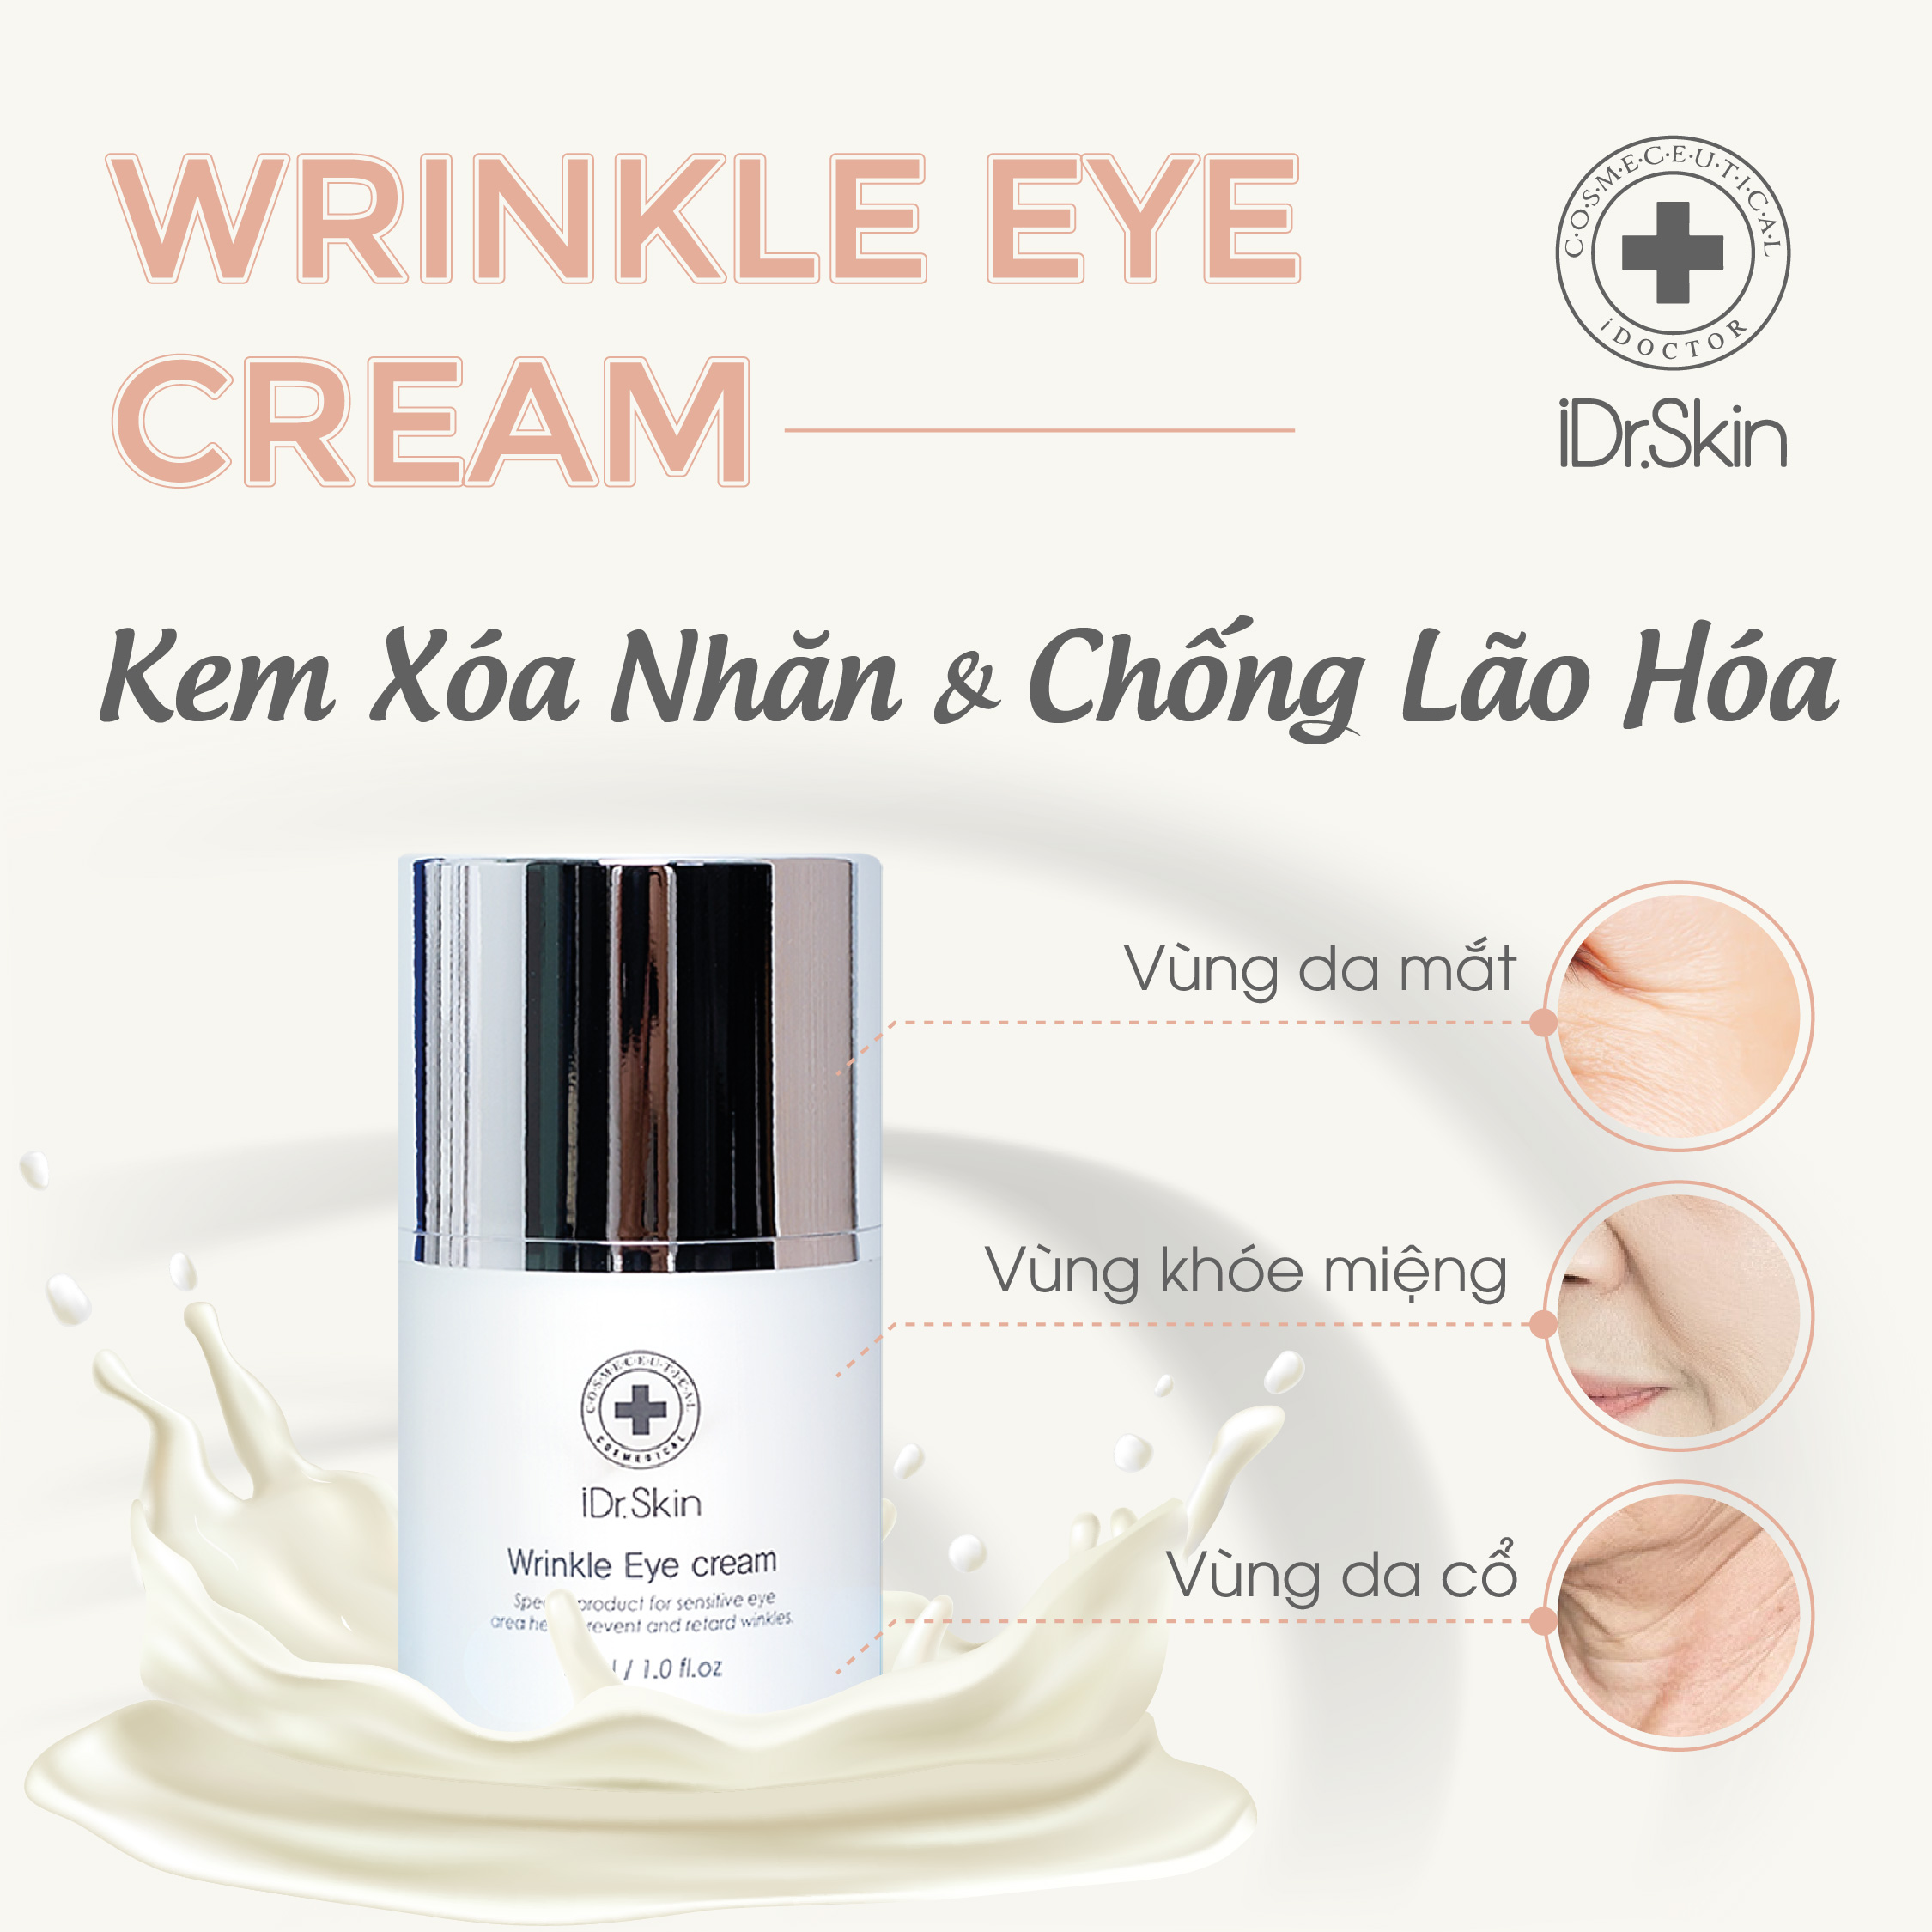 wrinkle-eye-cream-chong-lao-hoa-da-mat